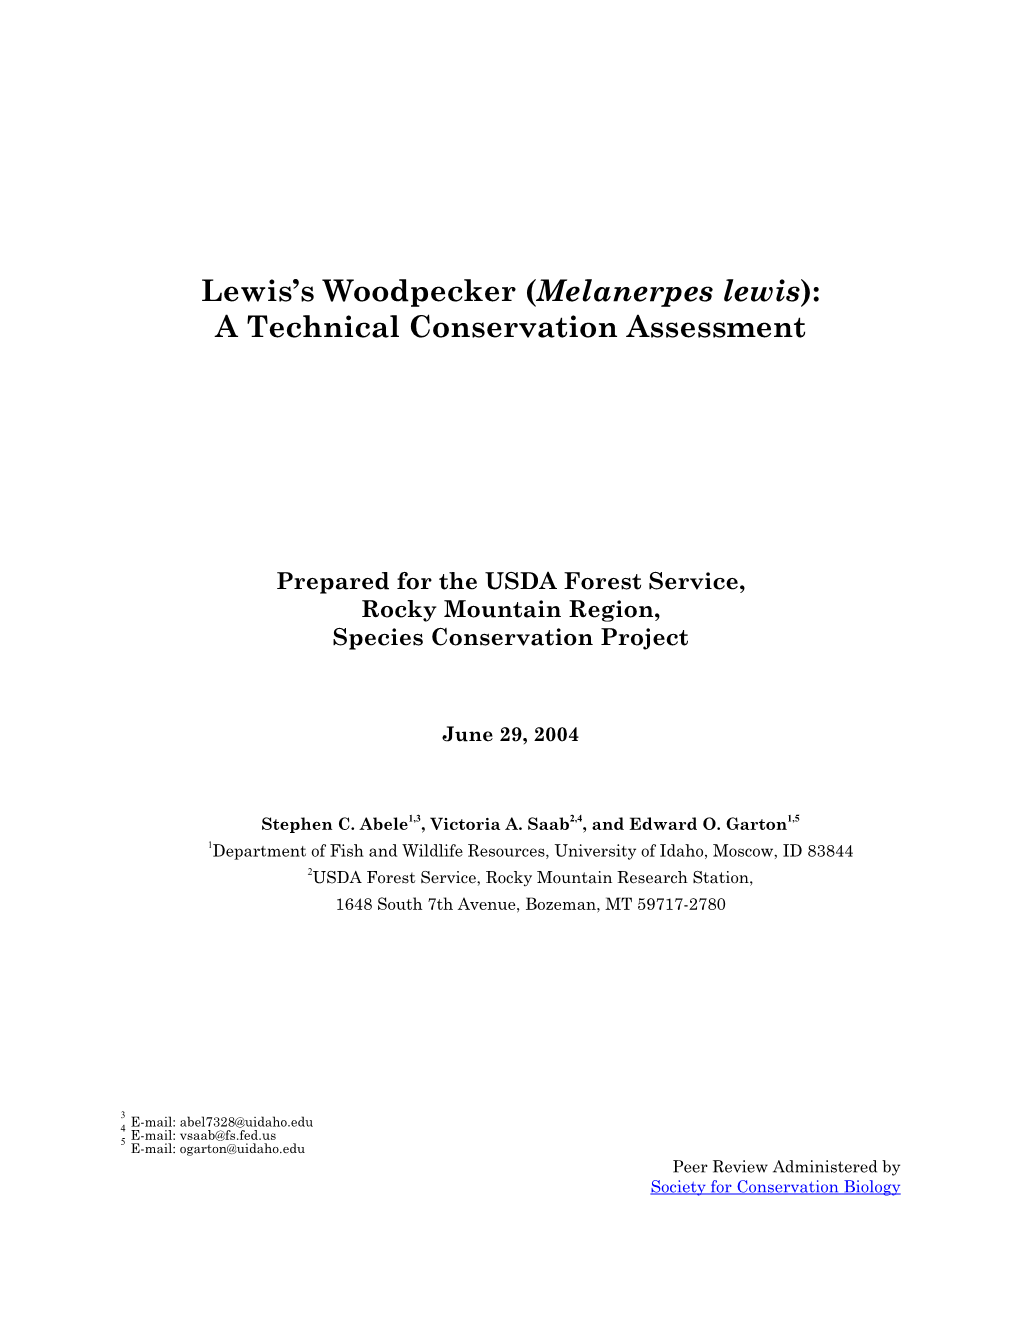 (Melanerpes Lewis): a Technical Conservation Assessment